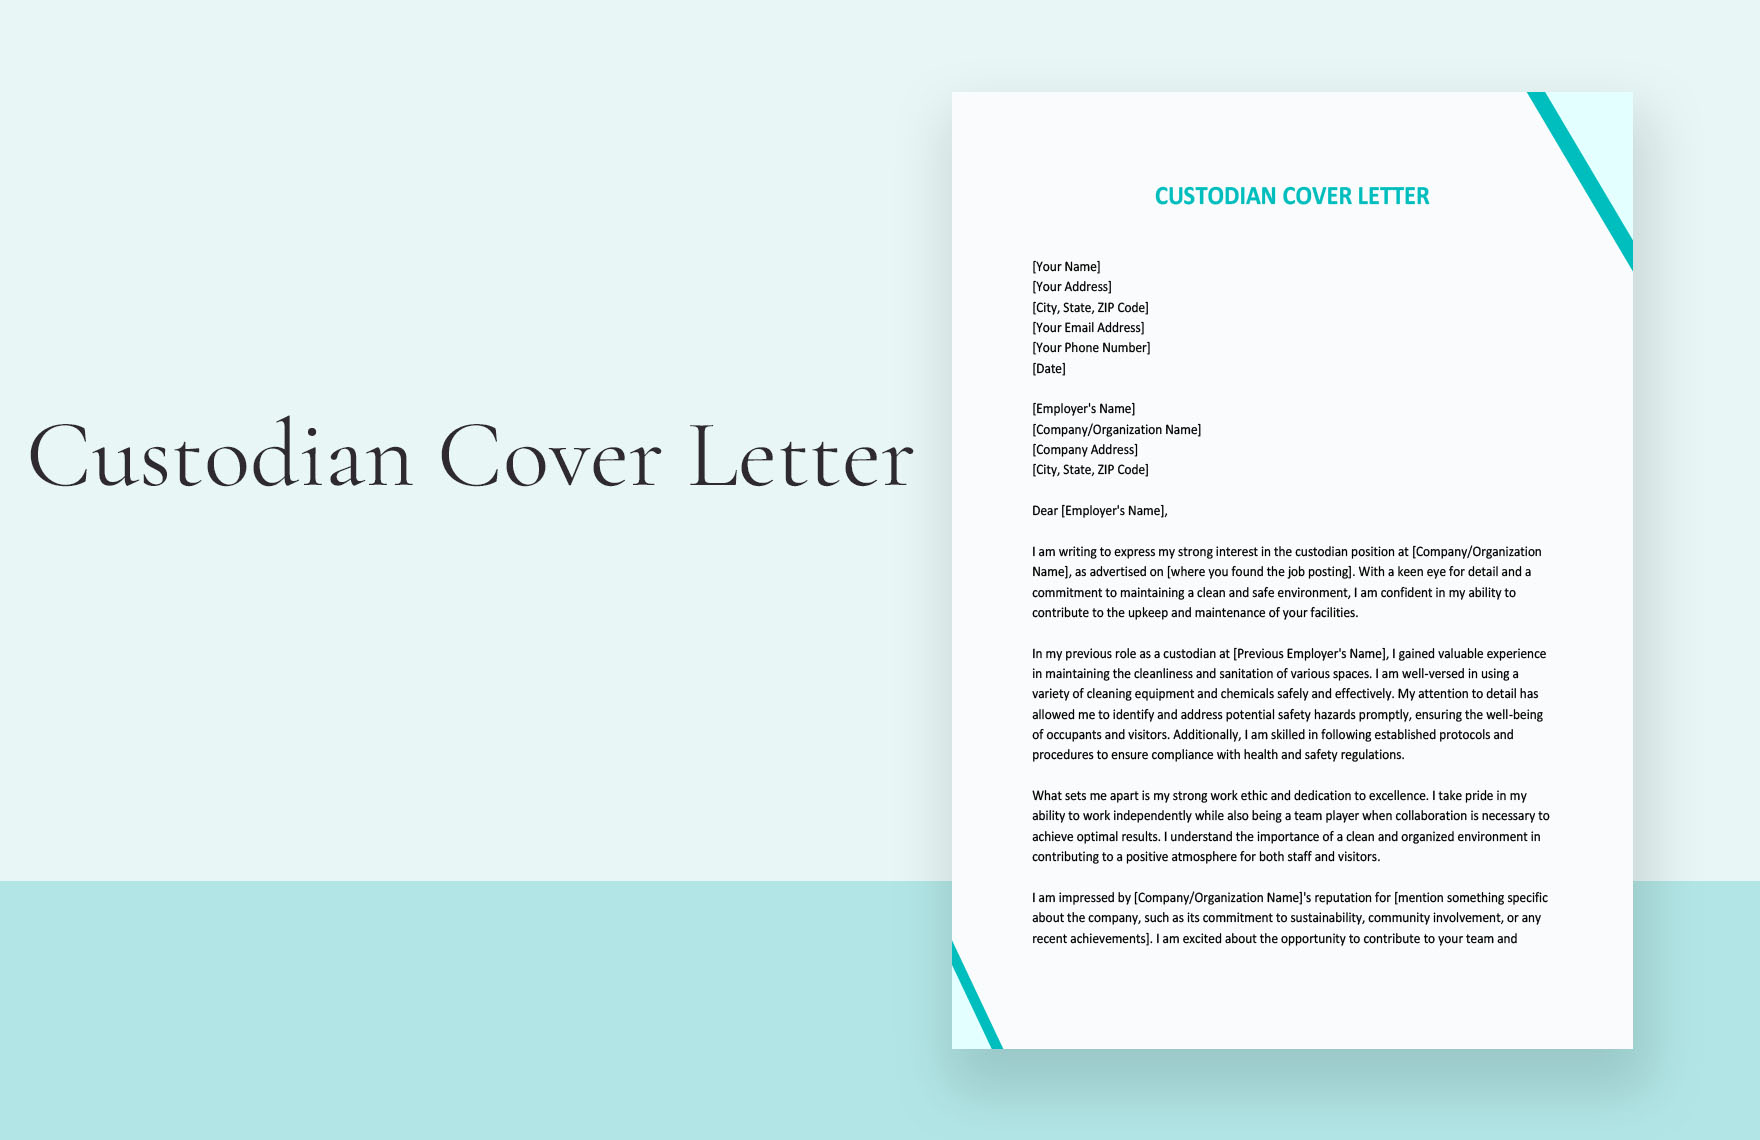 Custodian Cover Letter in Word, Google Docs